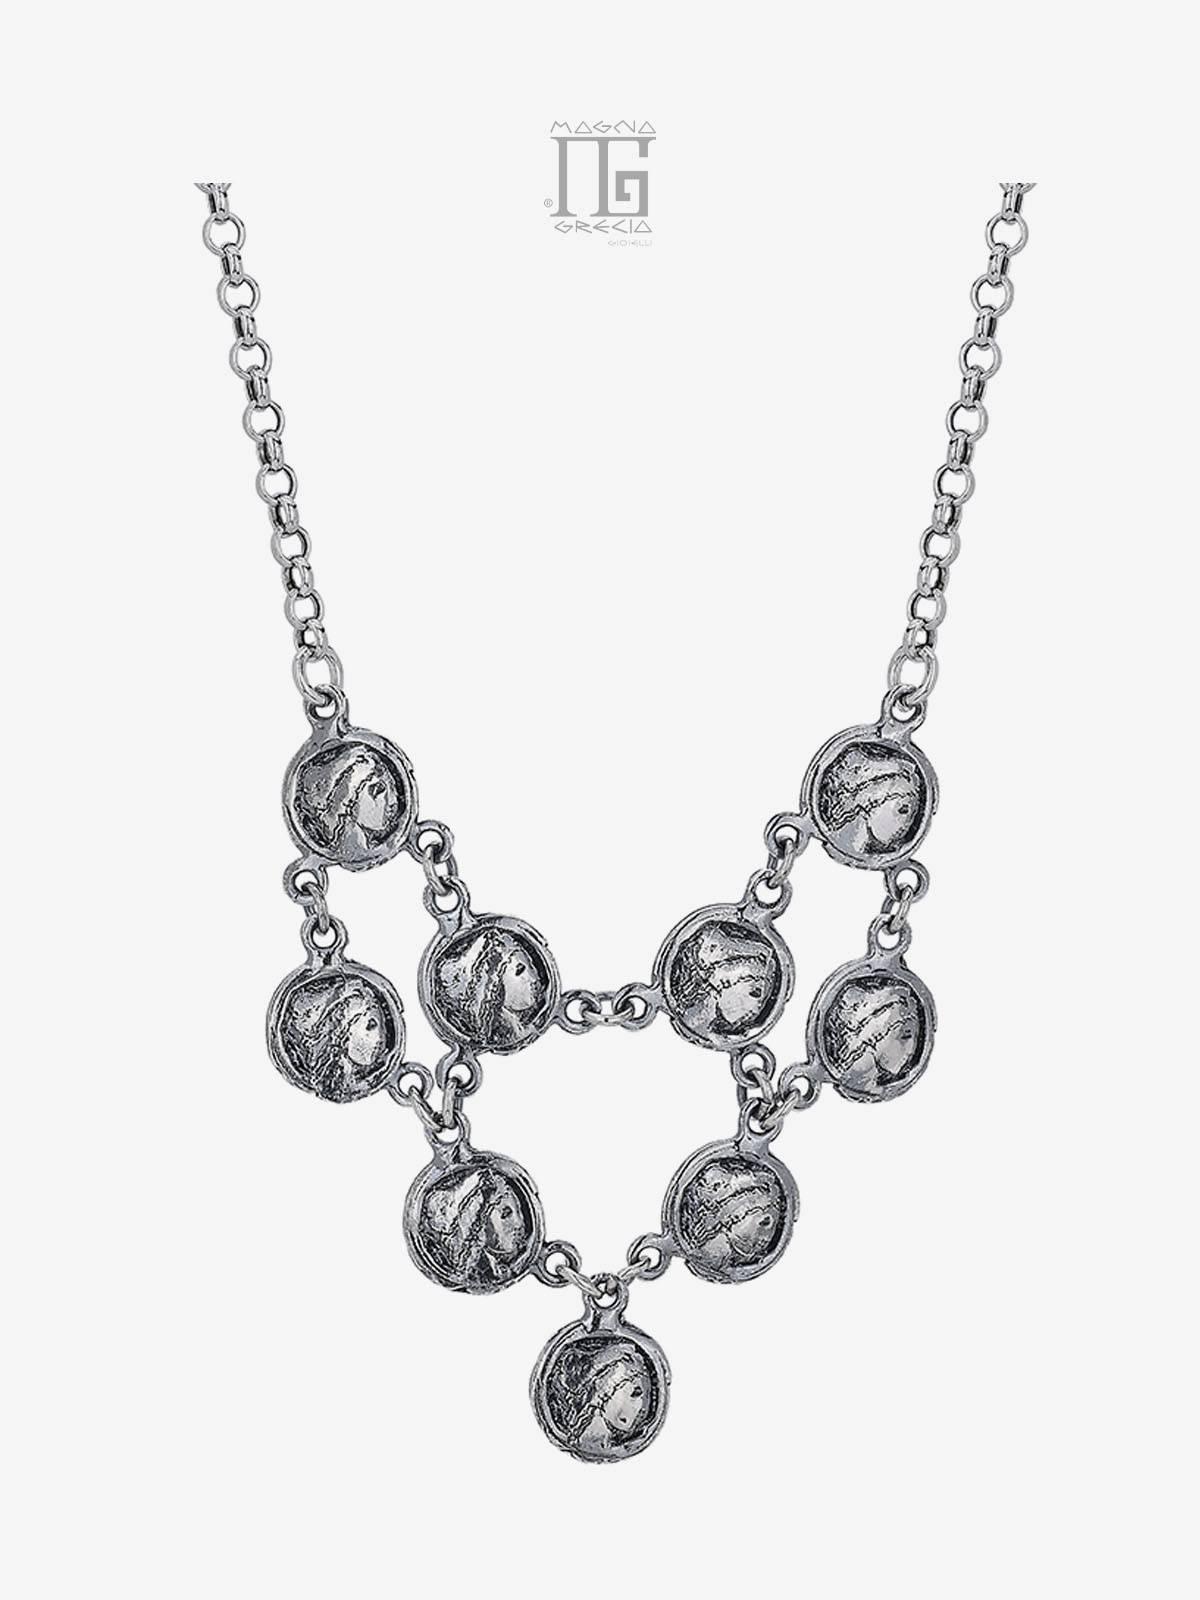 Collar de plata con monedas que representan a la Diosa Venus Milo Cod MGK 4264 V.